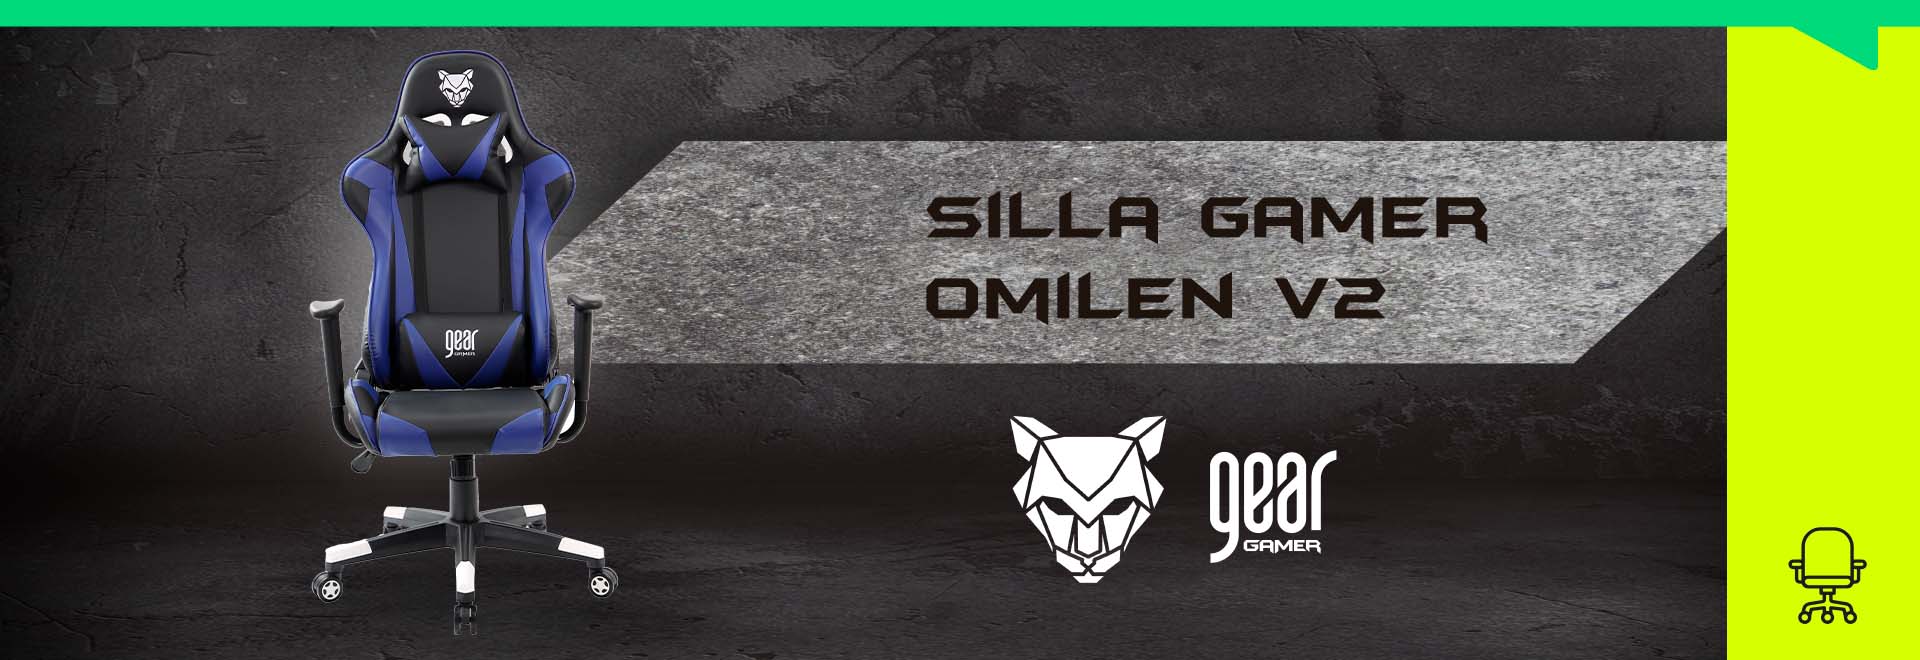 sillas-gear-gamer-omilen